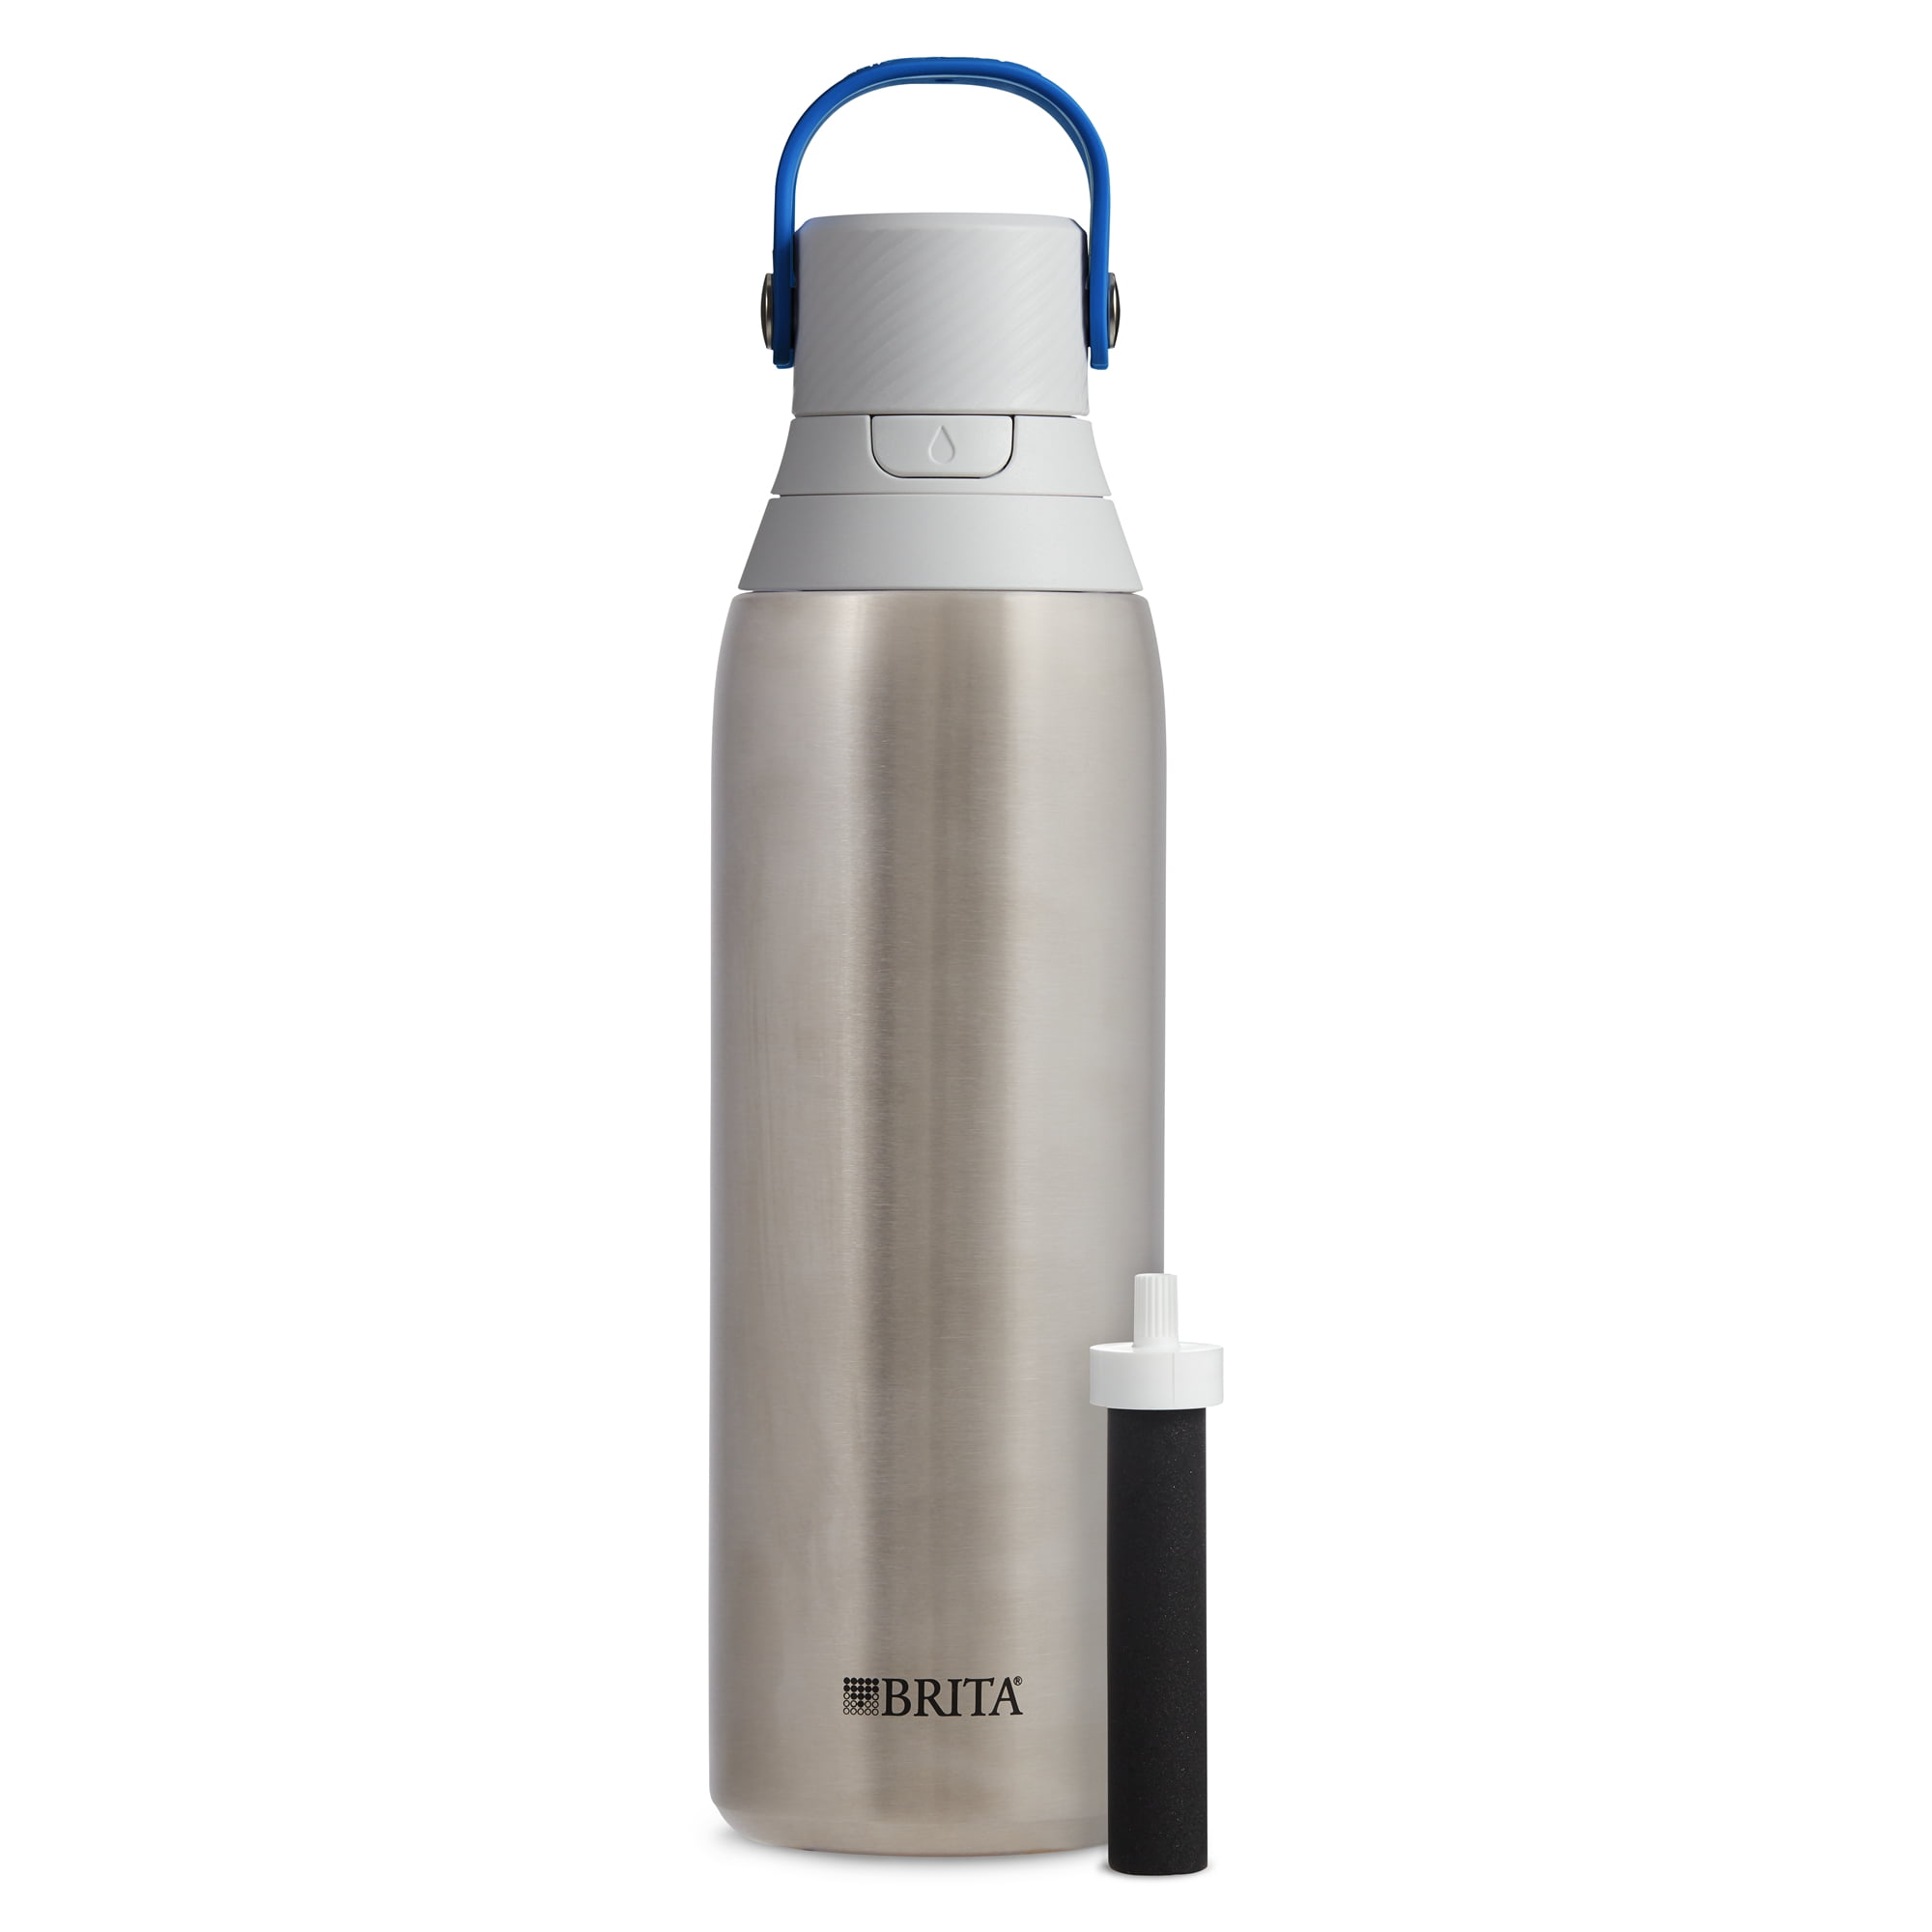 Brita 20 Ounce Premium Filtering Water Bottle with Filter - BPA Free Brita Stainless Steel Filtering Water Bottle